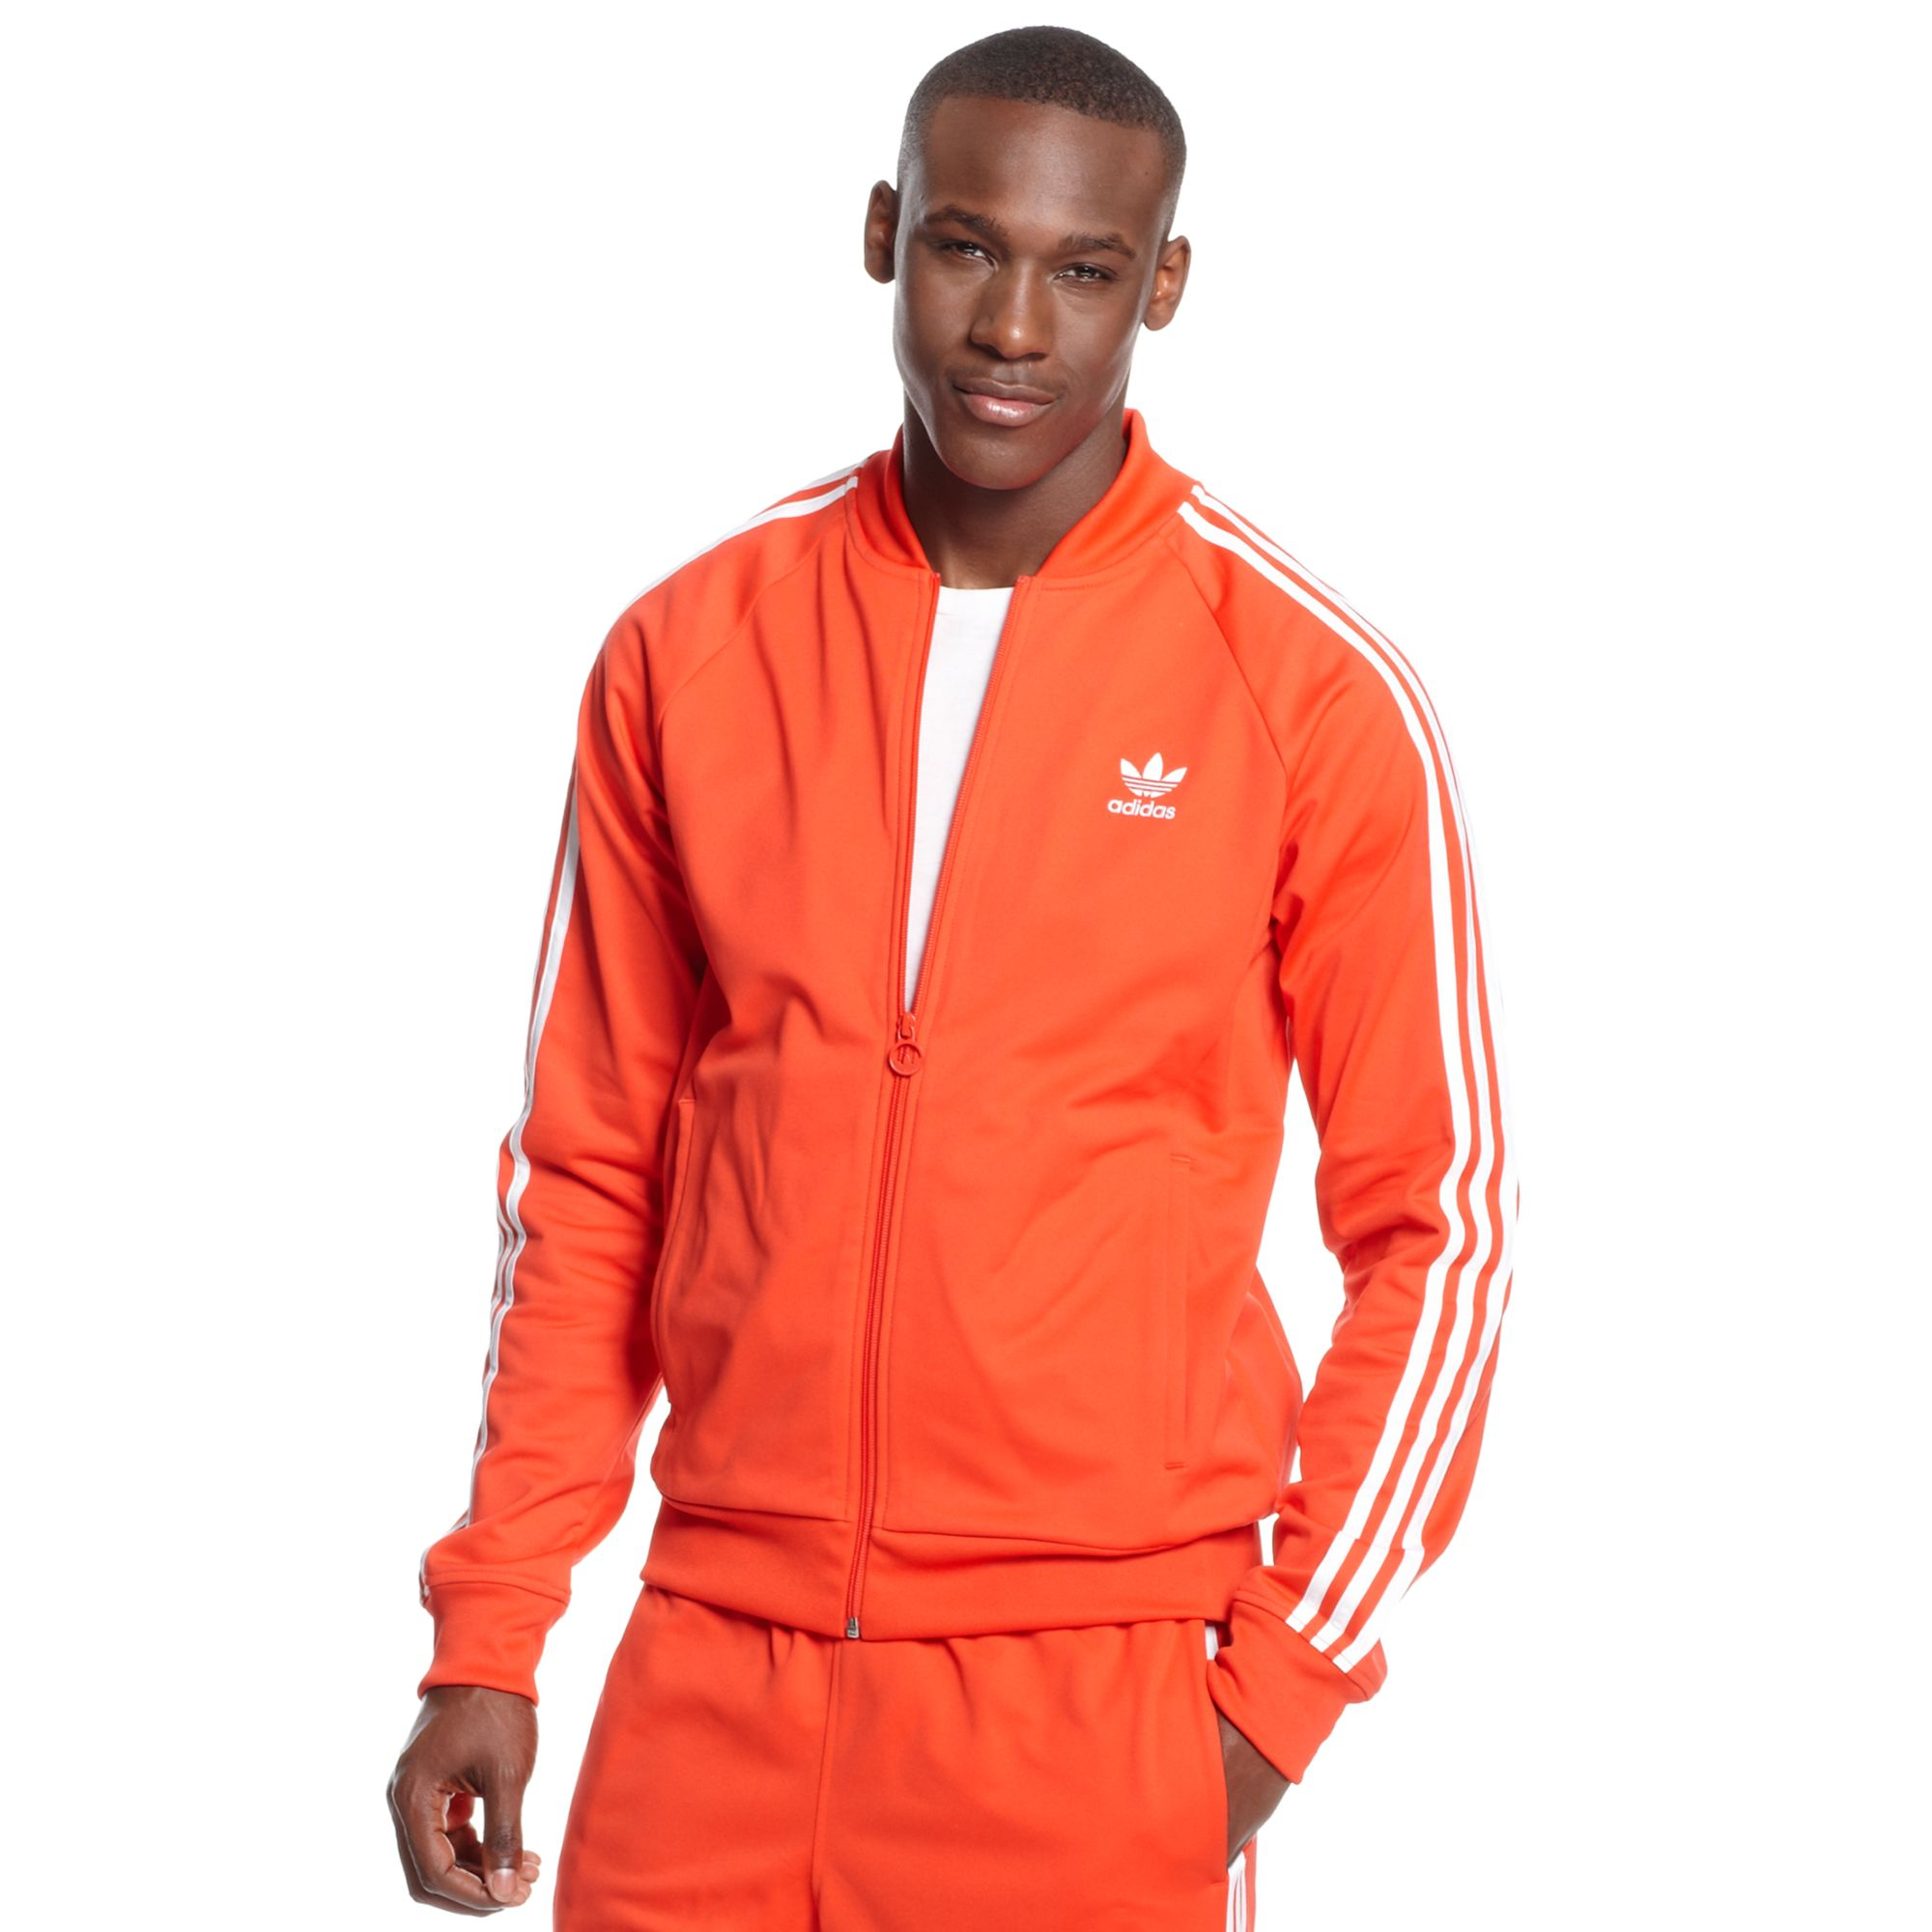 adidas Originals Superstar Track Jacket in Red/White (Red) for Men - Lyst